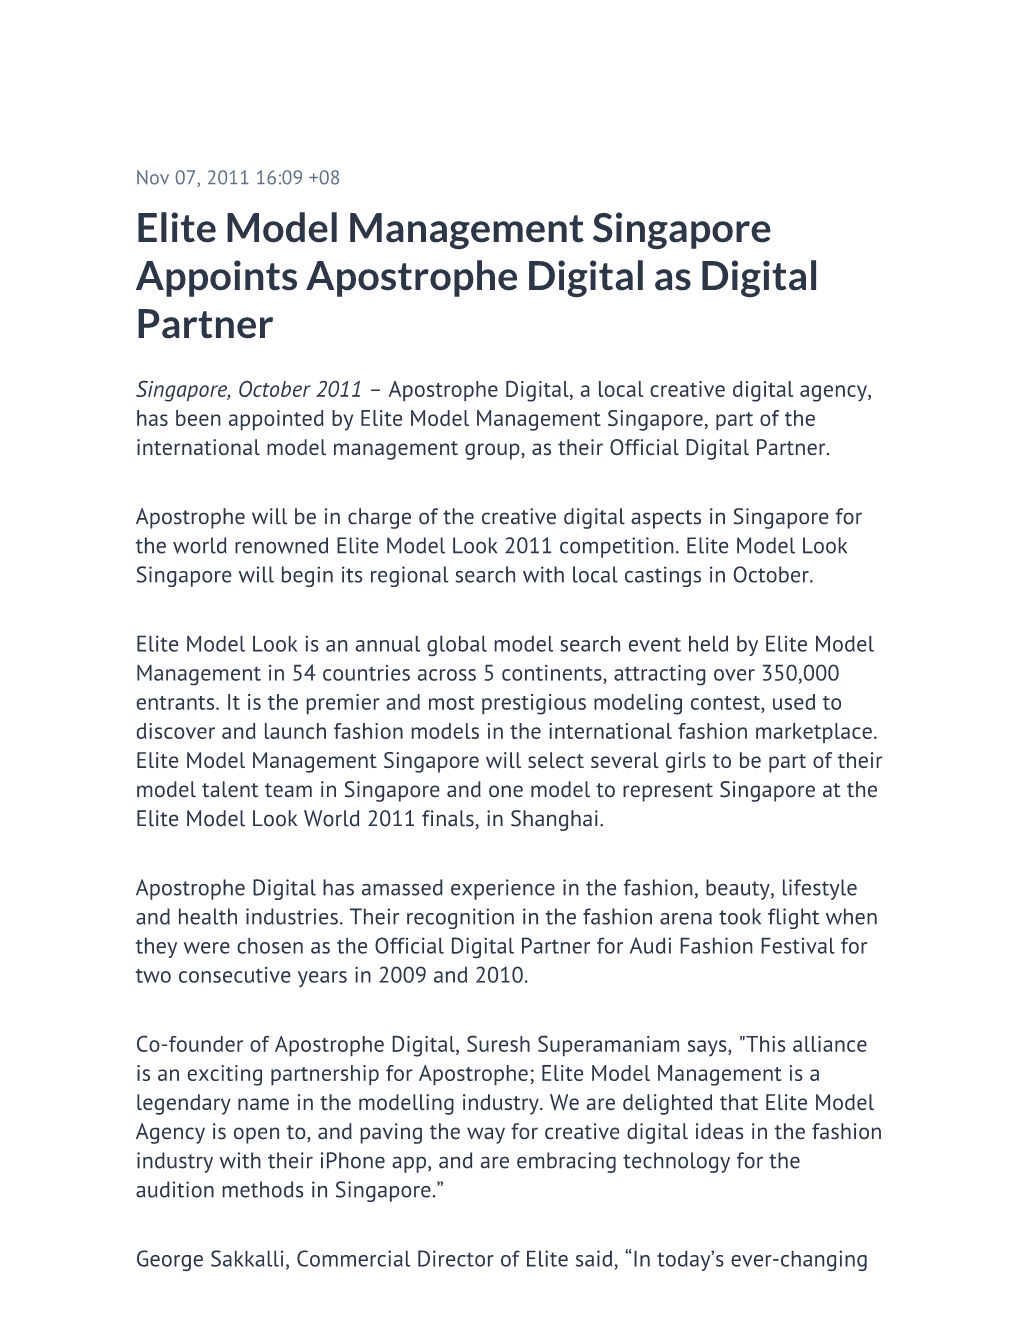 Elite Model Management Singapore Appoints Apostrophe Digital As Digital Partner